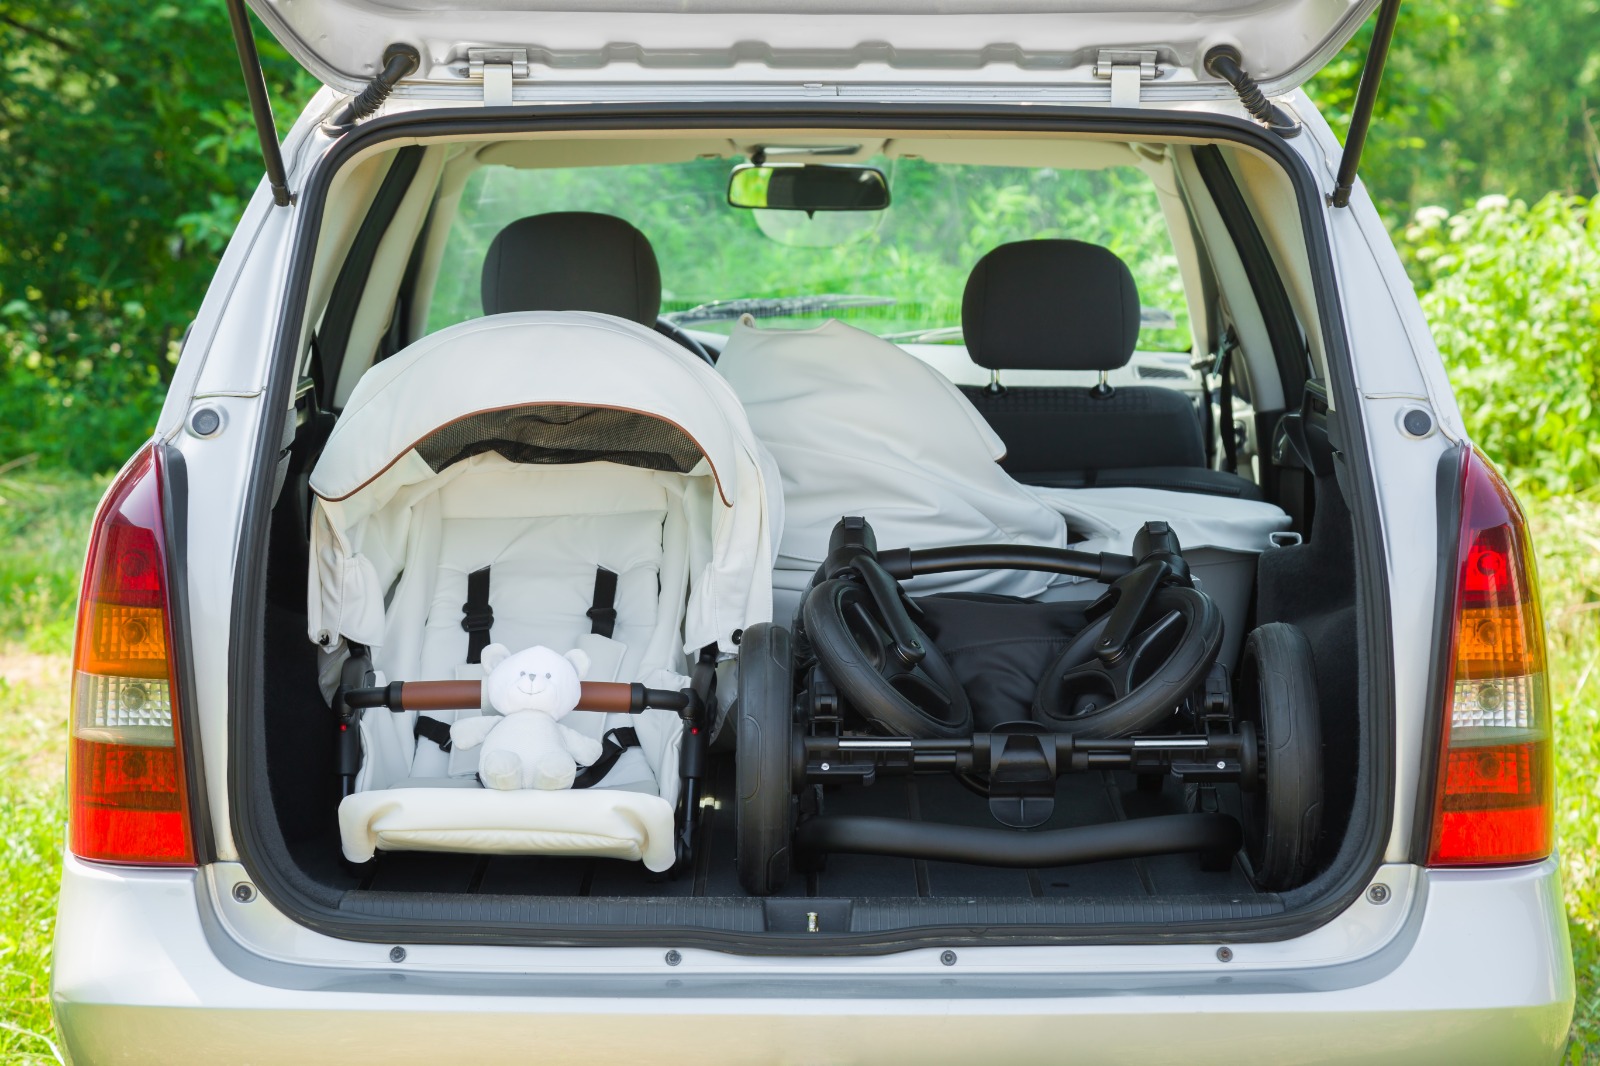 graco modes pramette travel system toddler seat